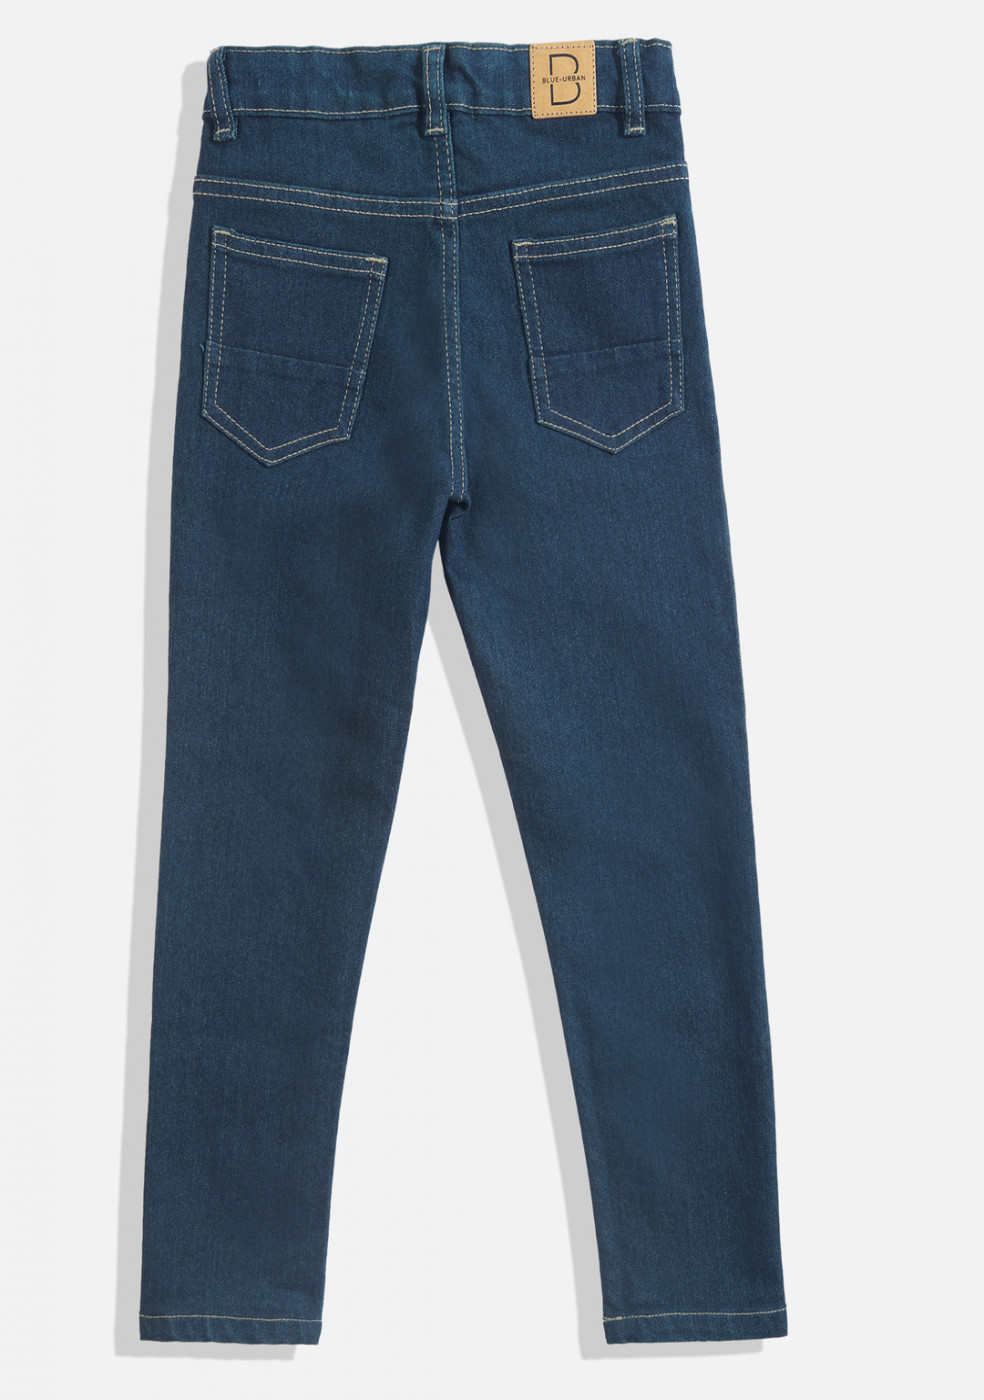 TINT Denim Jeans For Boys